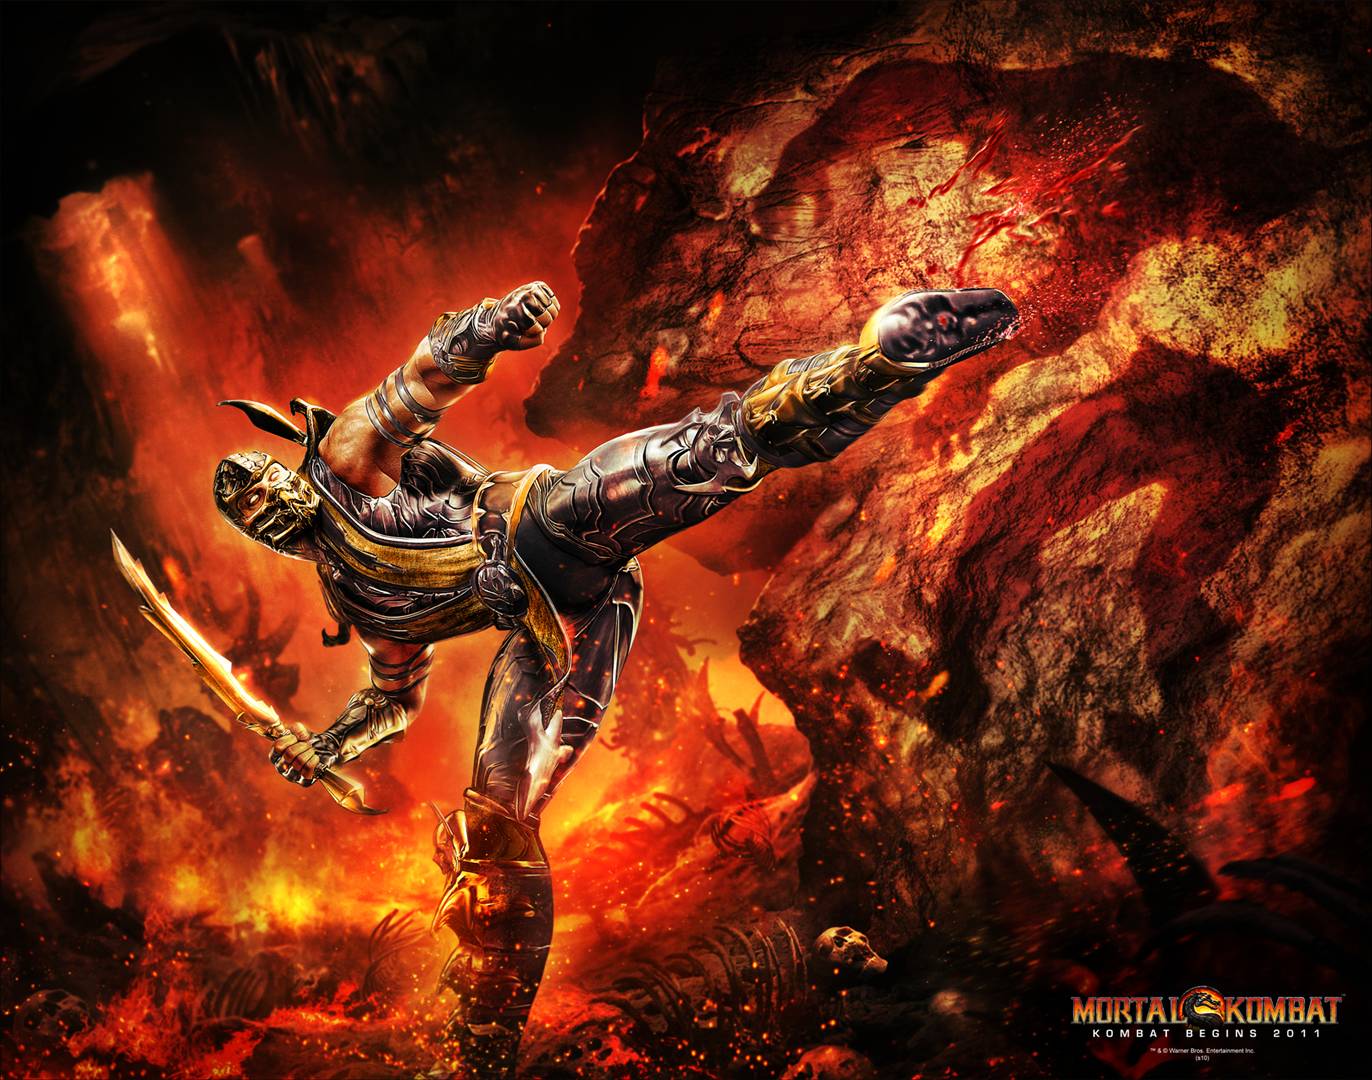 Mortal Kombat Wallpaper in full 1080P HD « GamingBolt.com: Video